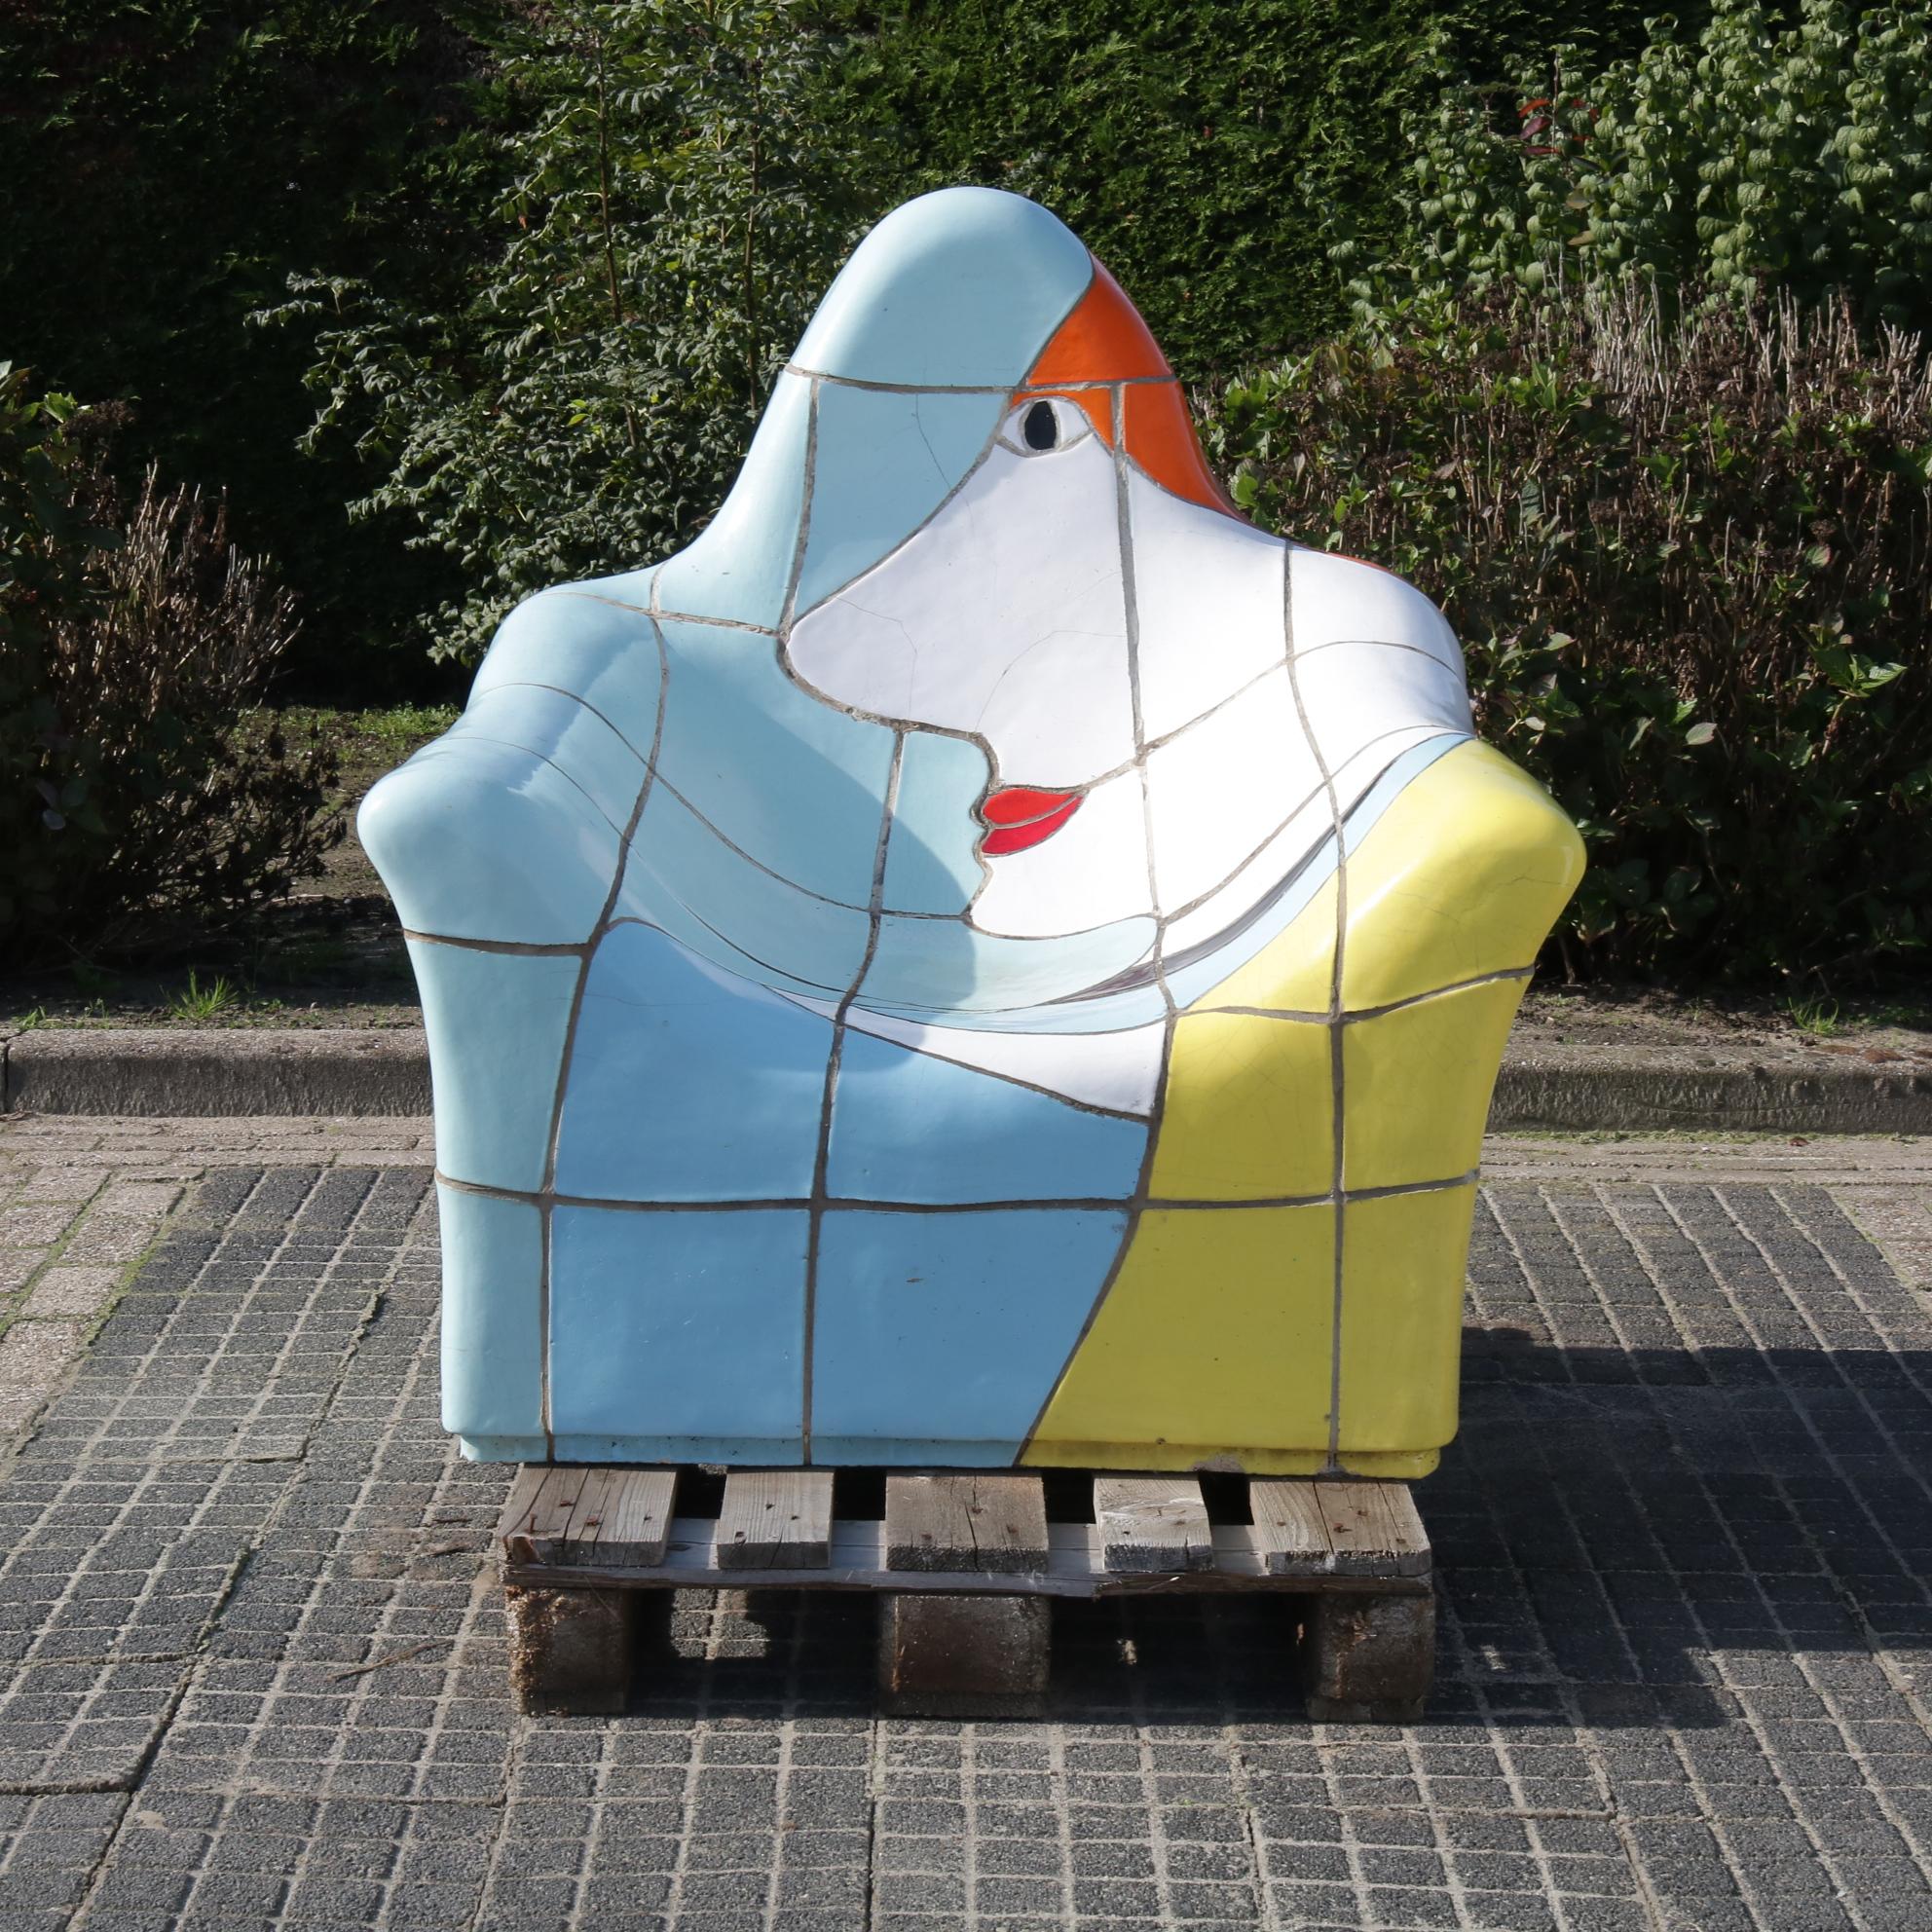 Mid-Century Modern Jan Snoeck Ceramics Chair or Sculpture from the MS Volendam, Netherlands 1990